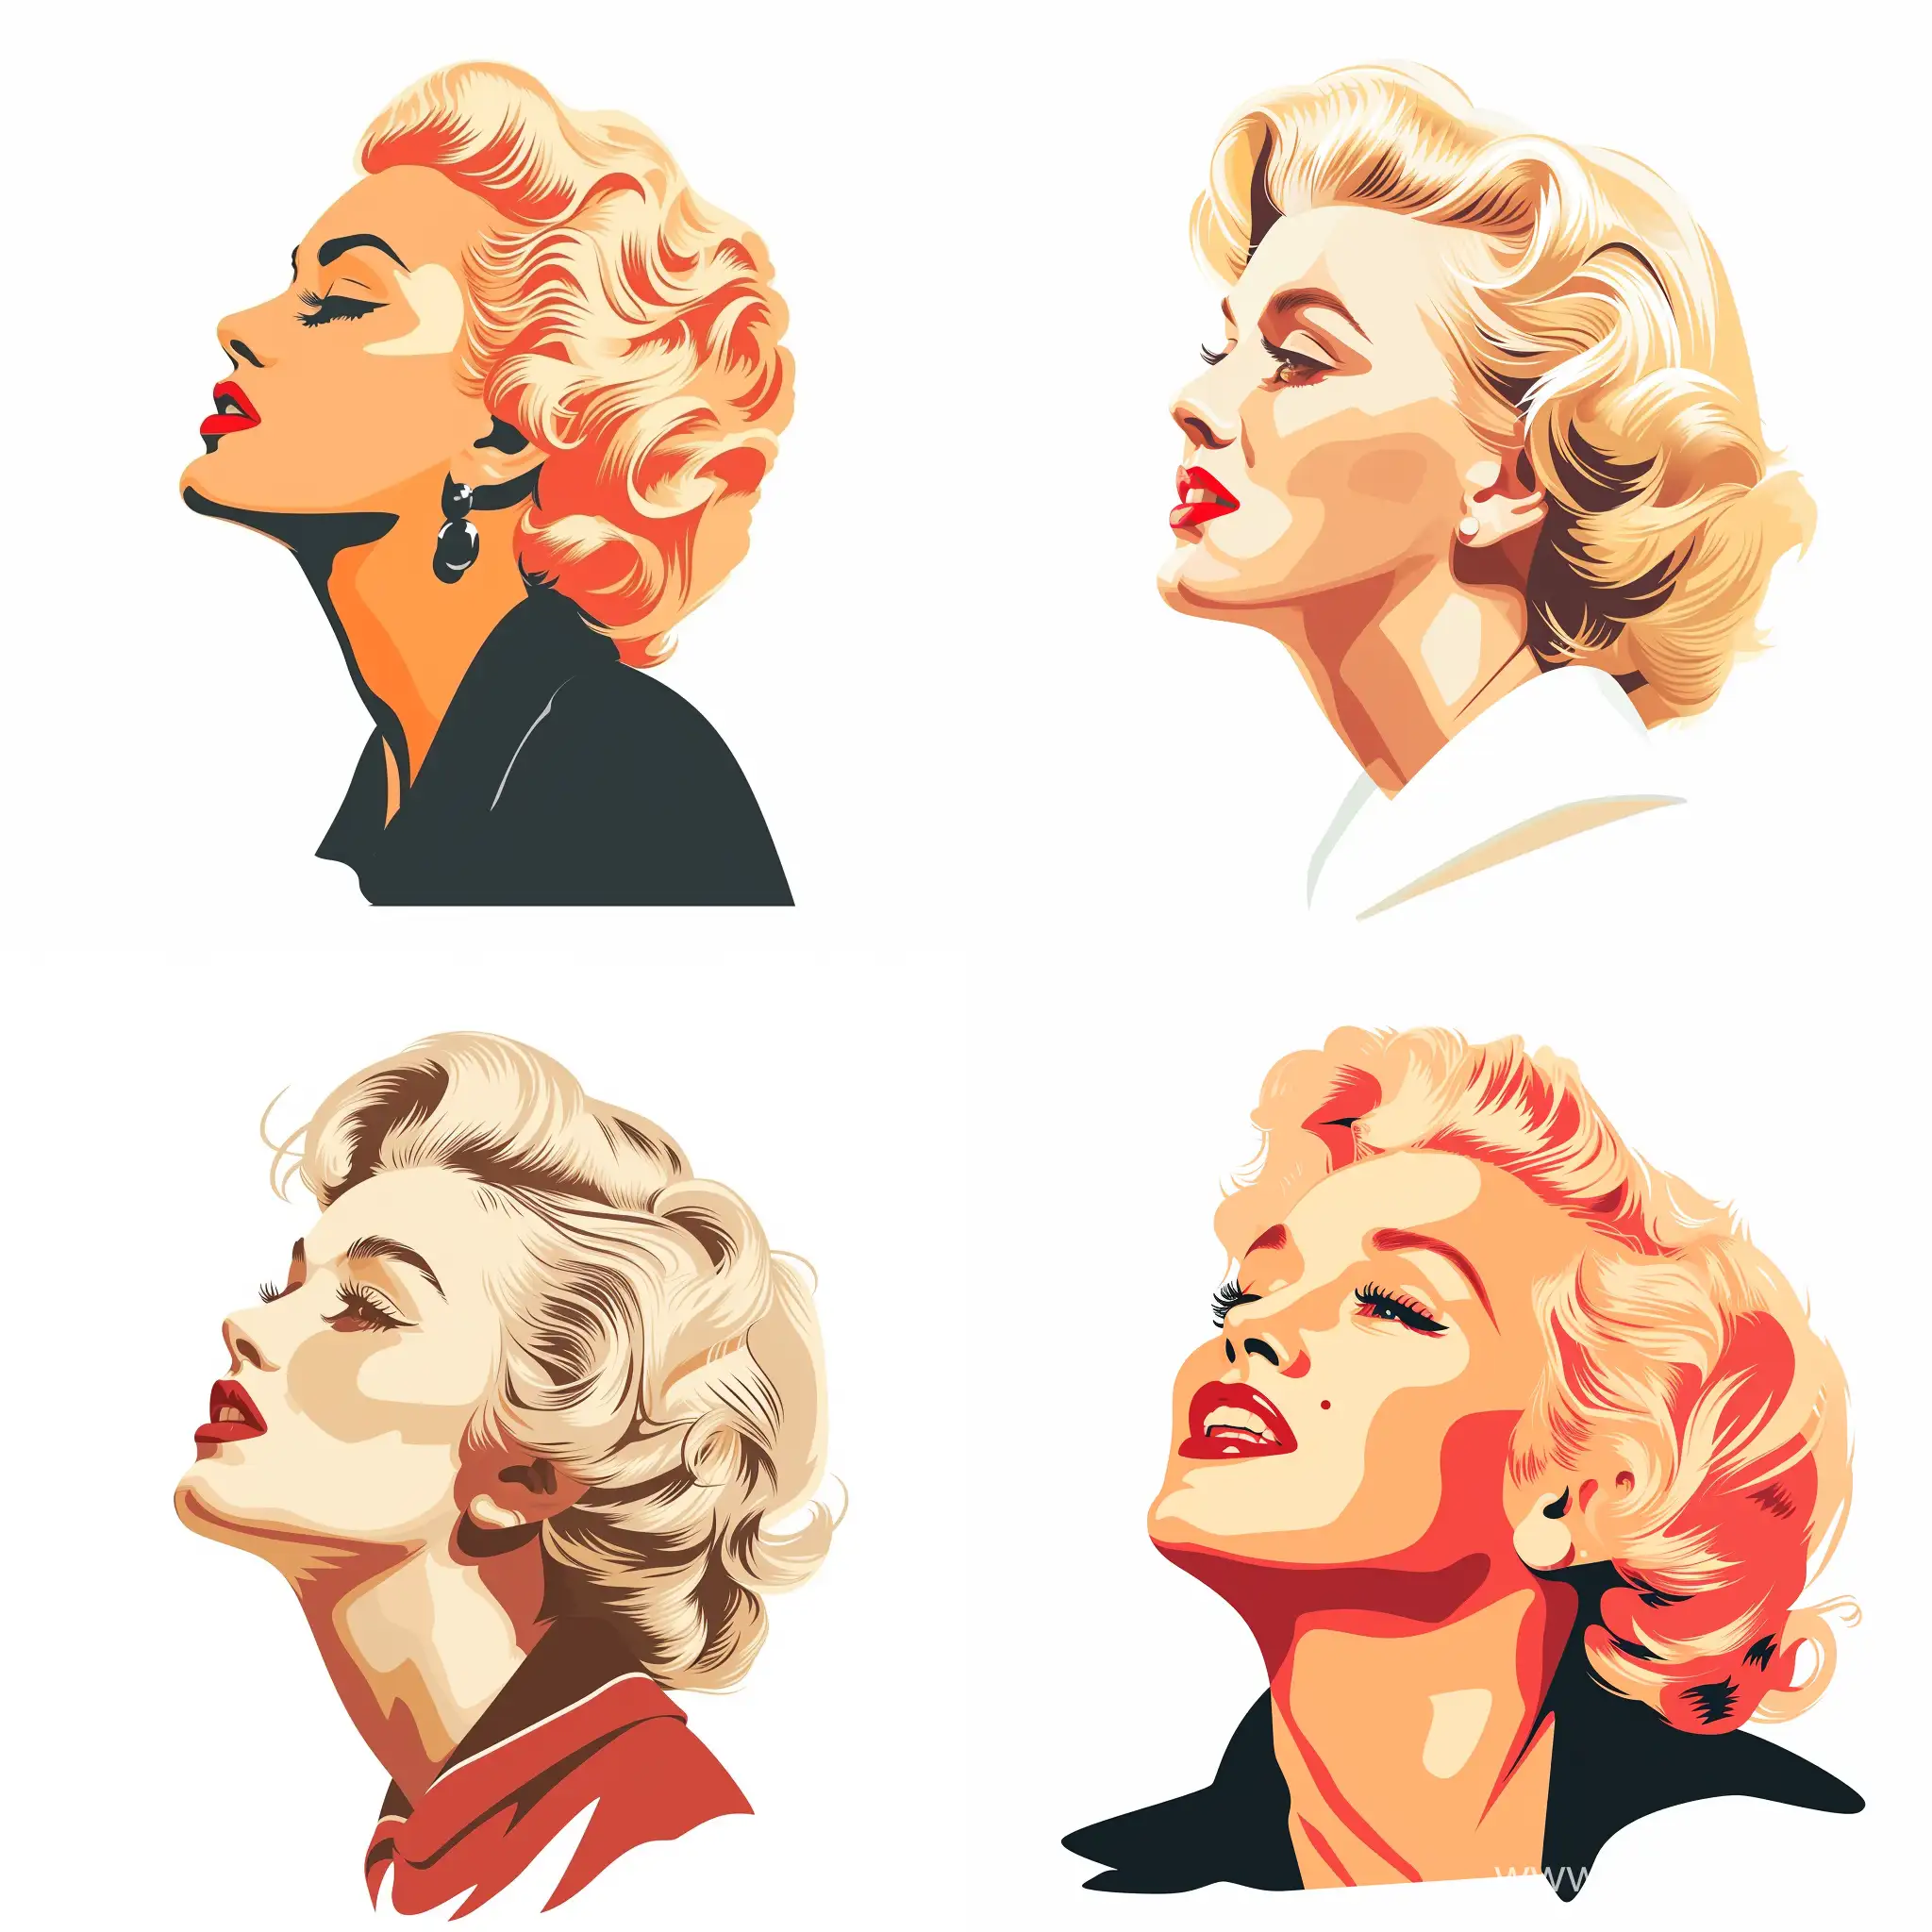 Profile portrait of Marilyn Monroe, on a white background, flat illustration, Victoria Ngai style